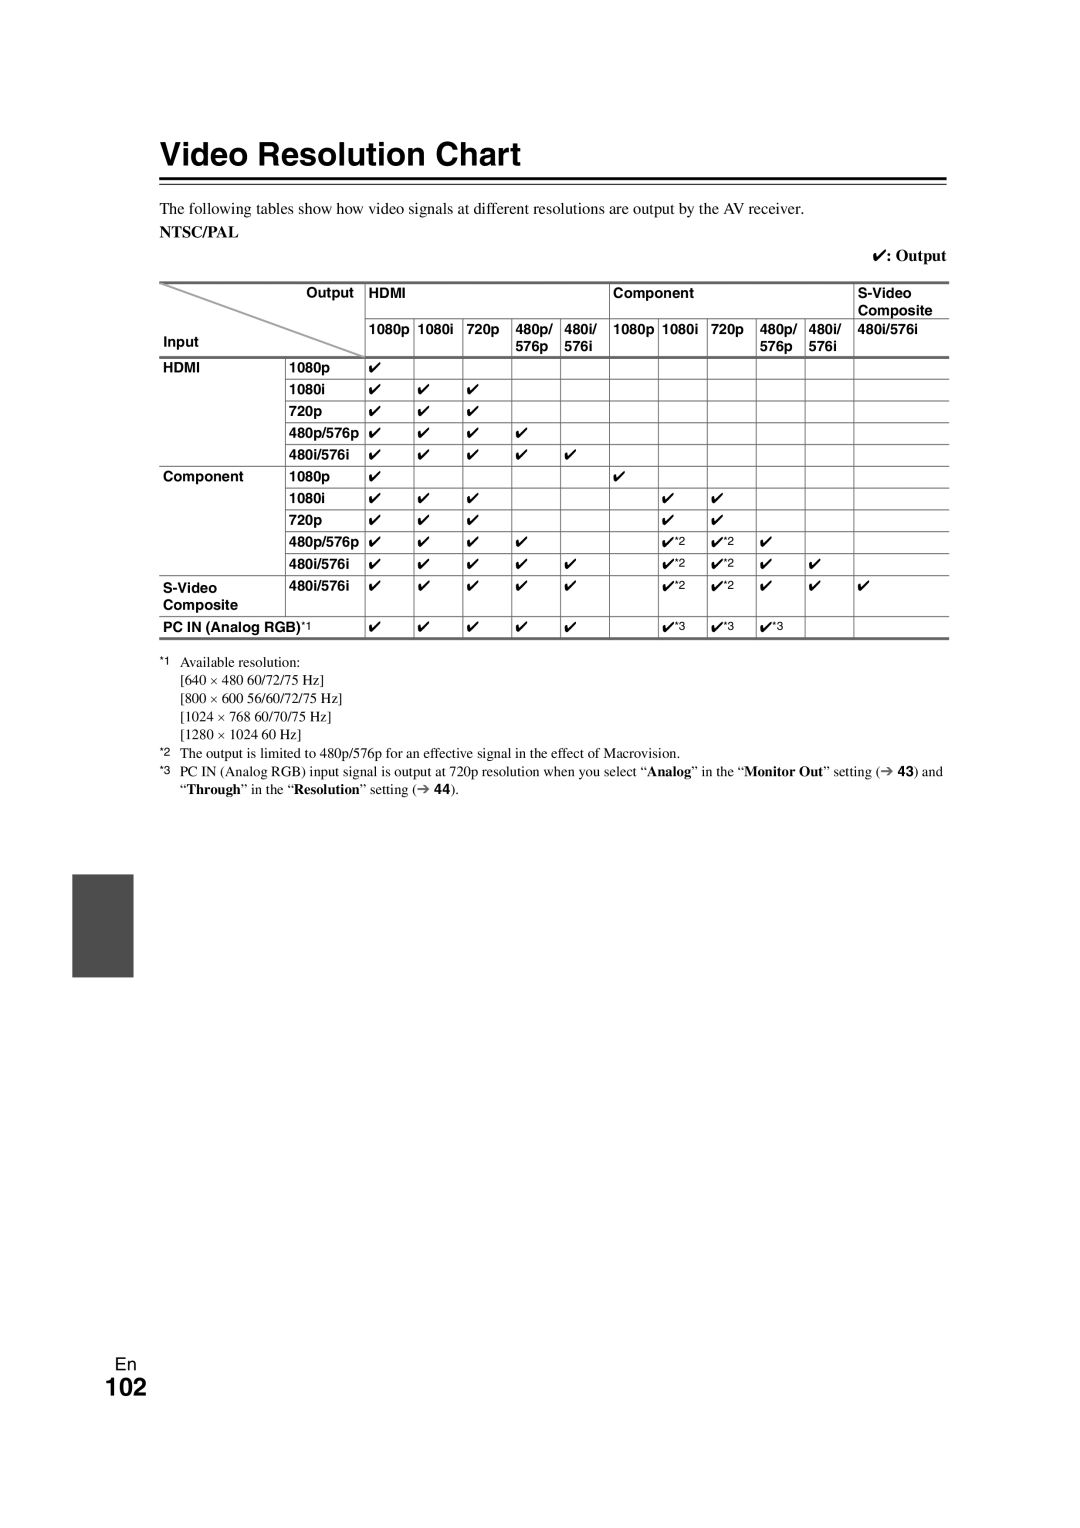 Onkyo TX-NR1008 instruction manual Video Resolution Chart, Ntsc/Pal, Output 